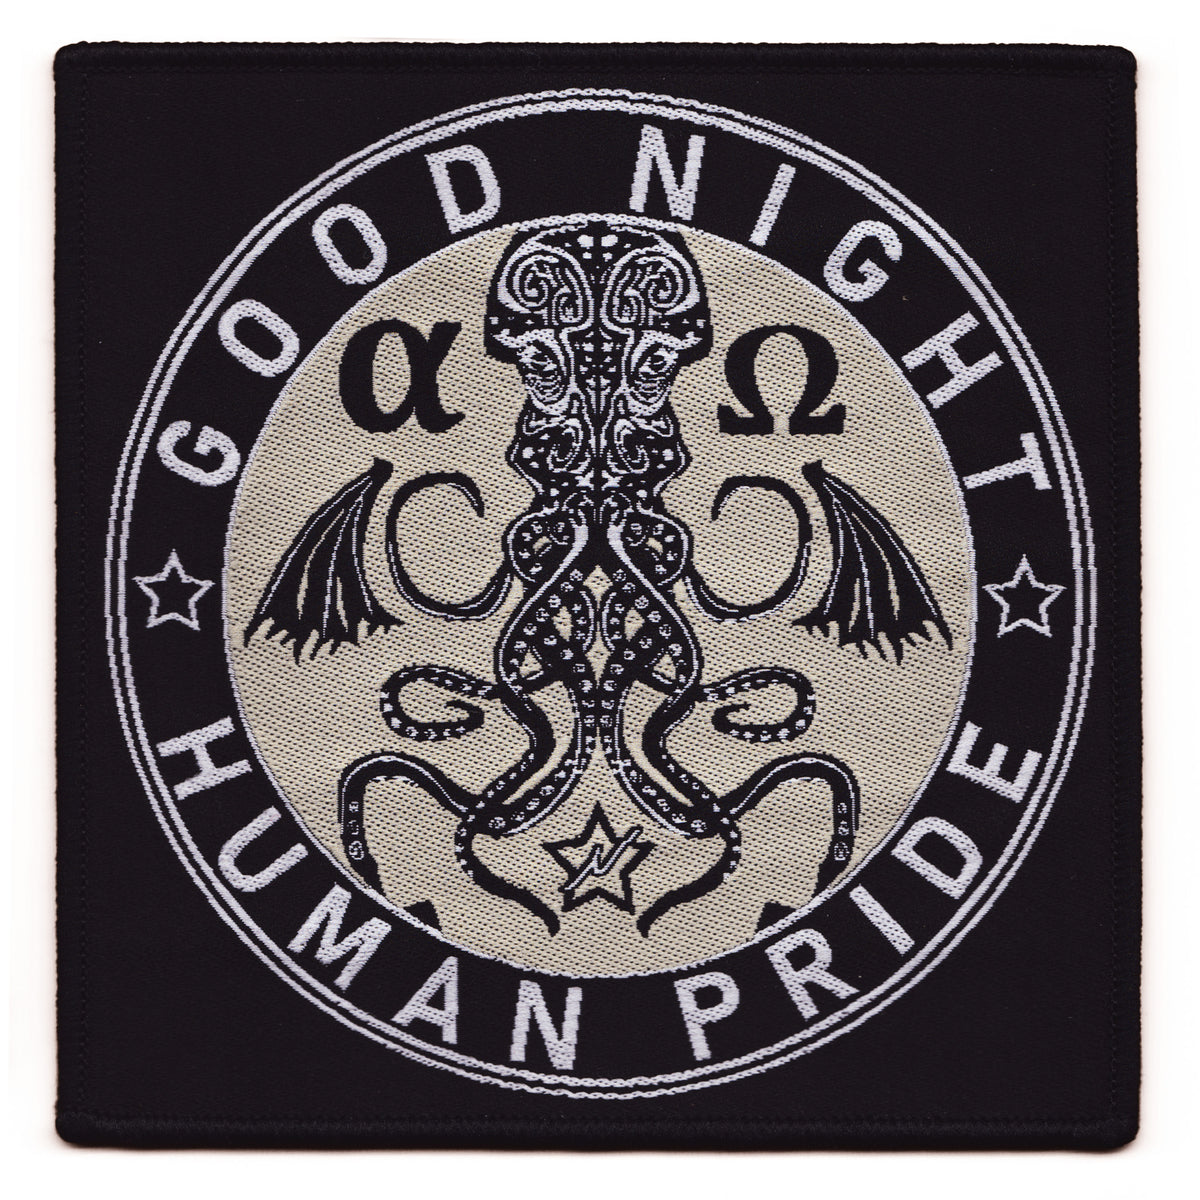 Good Night Human Pride - Aufnäher